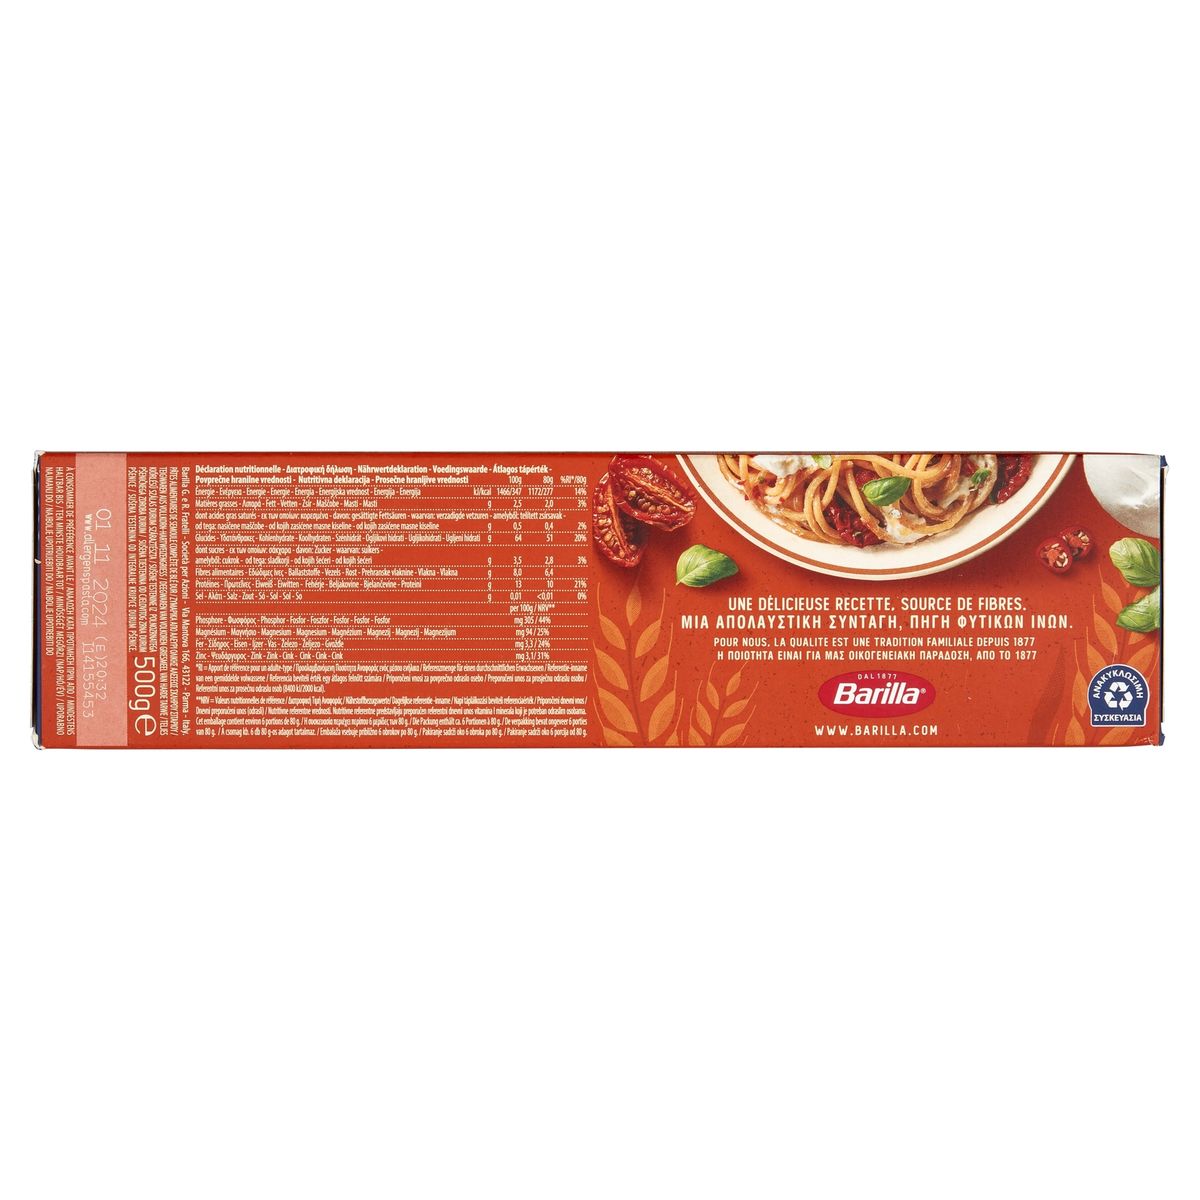 Barilla Pâtes Intégrales Spaghetti 500g